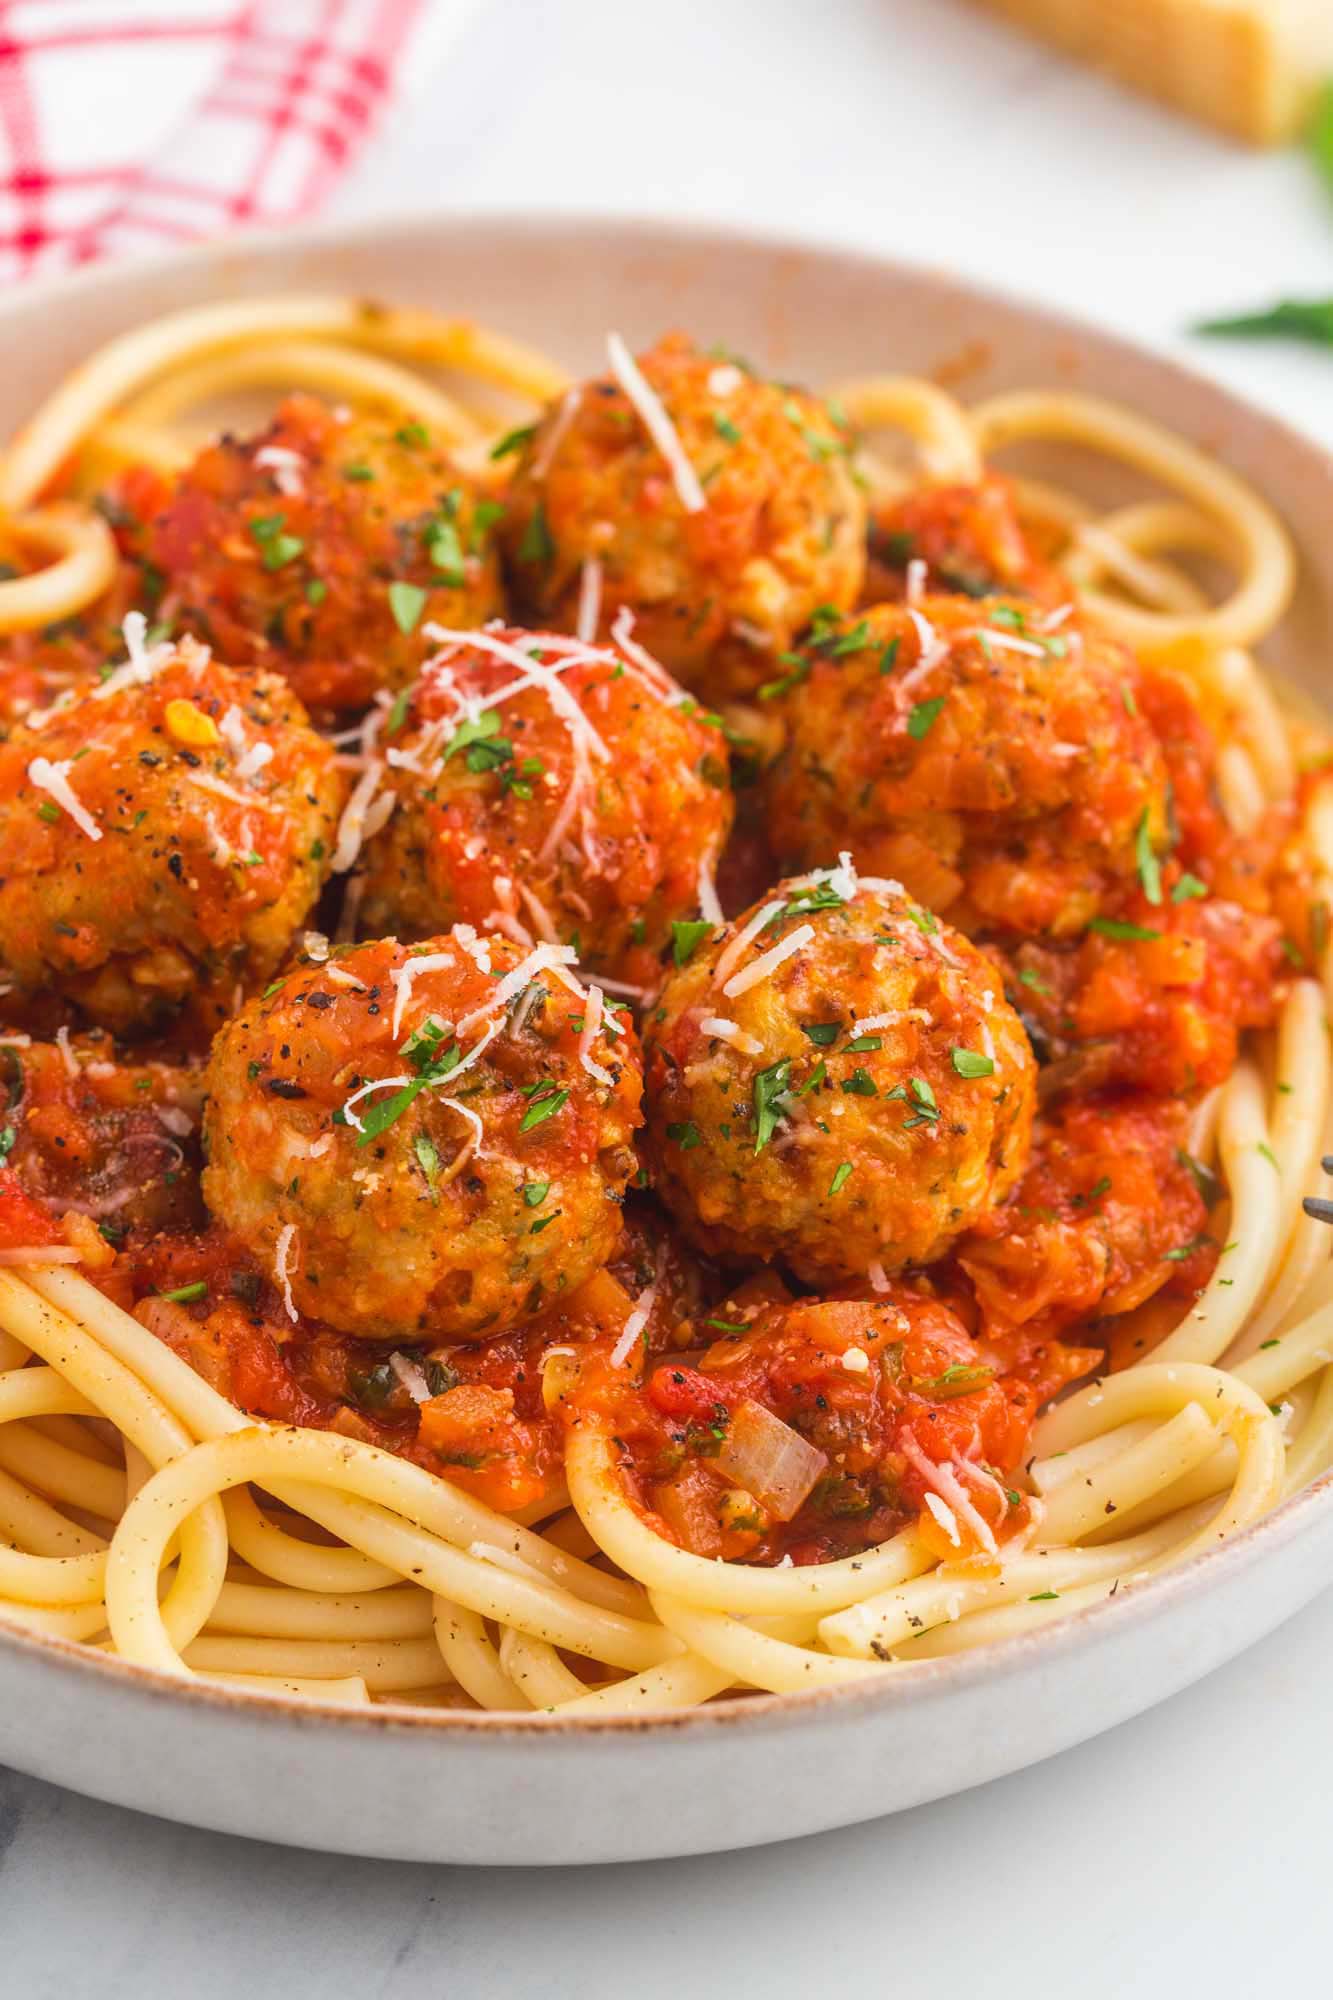 Turkey meatballs with tomato sauce served over spaghetti